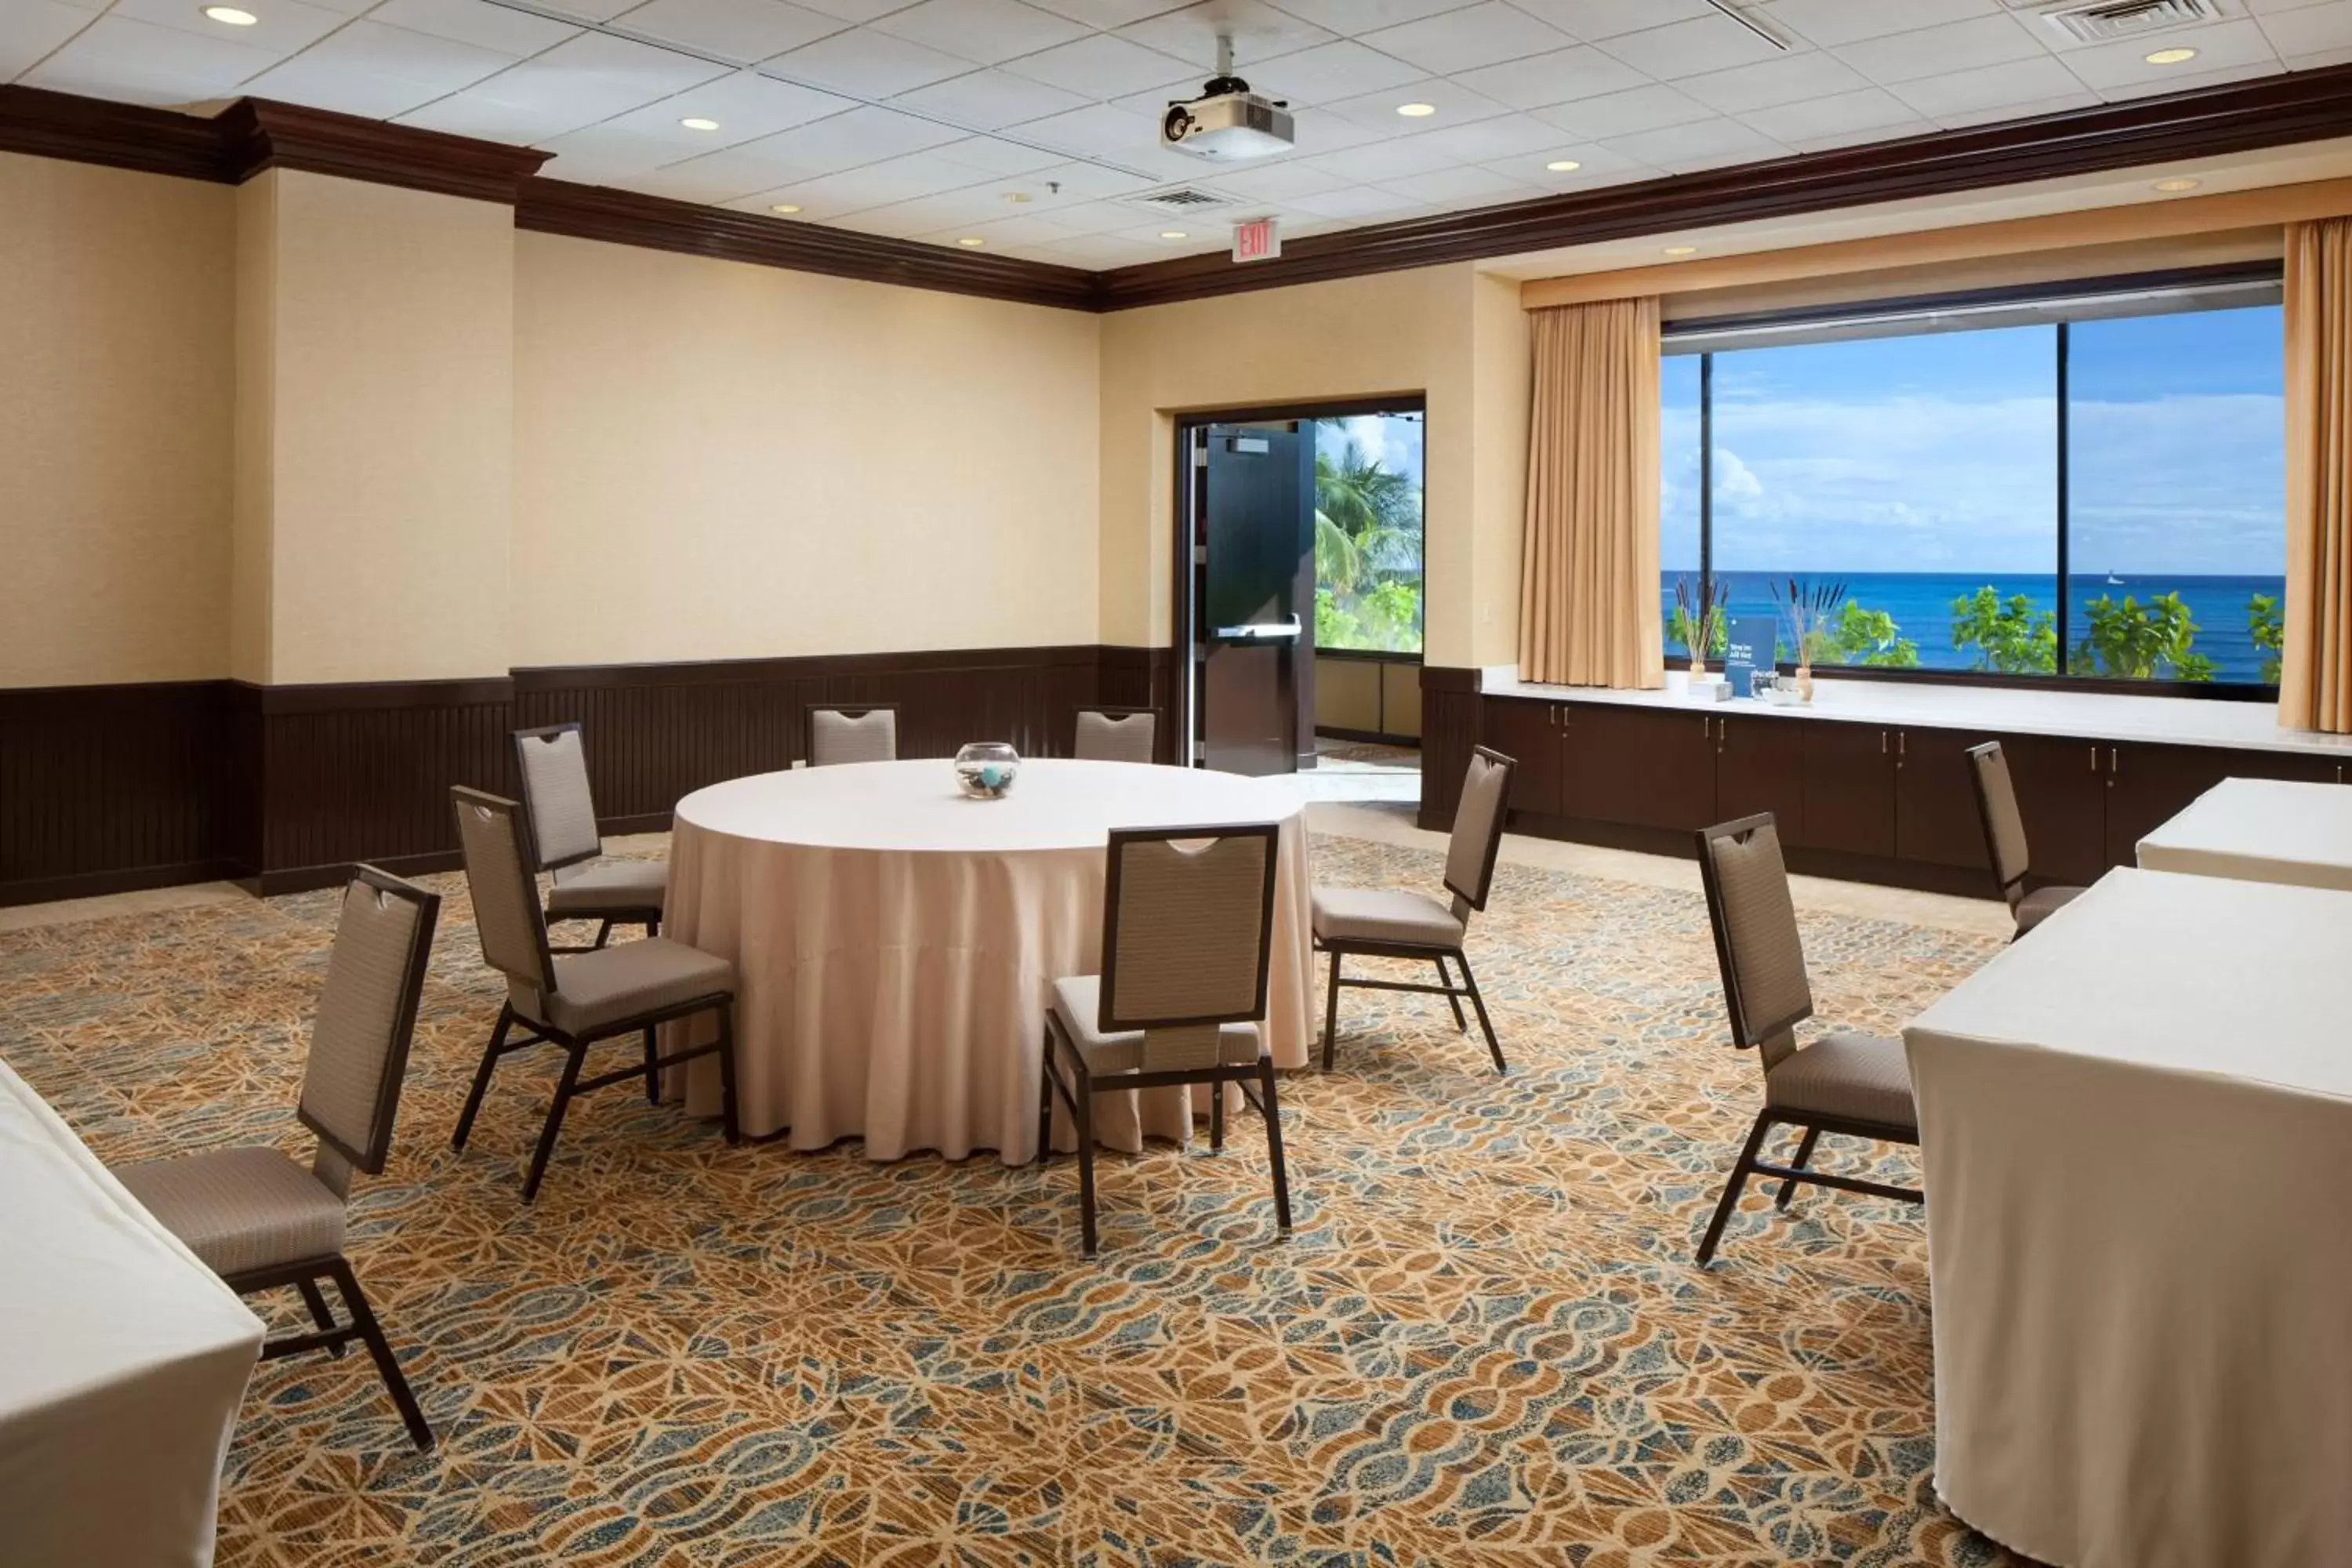 Meeting/conference room in Sheraton Waikiki